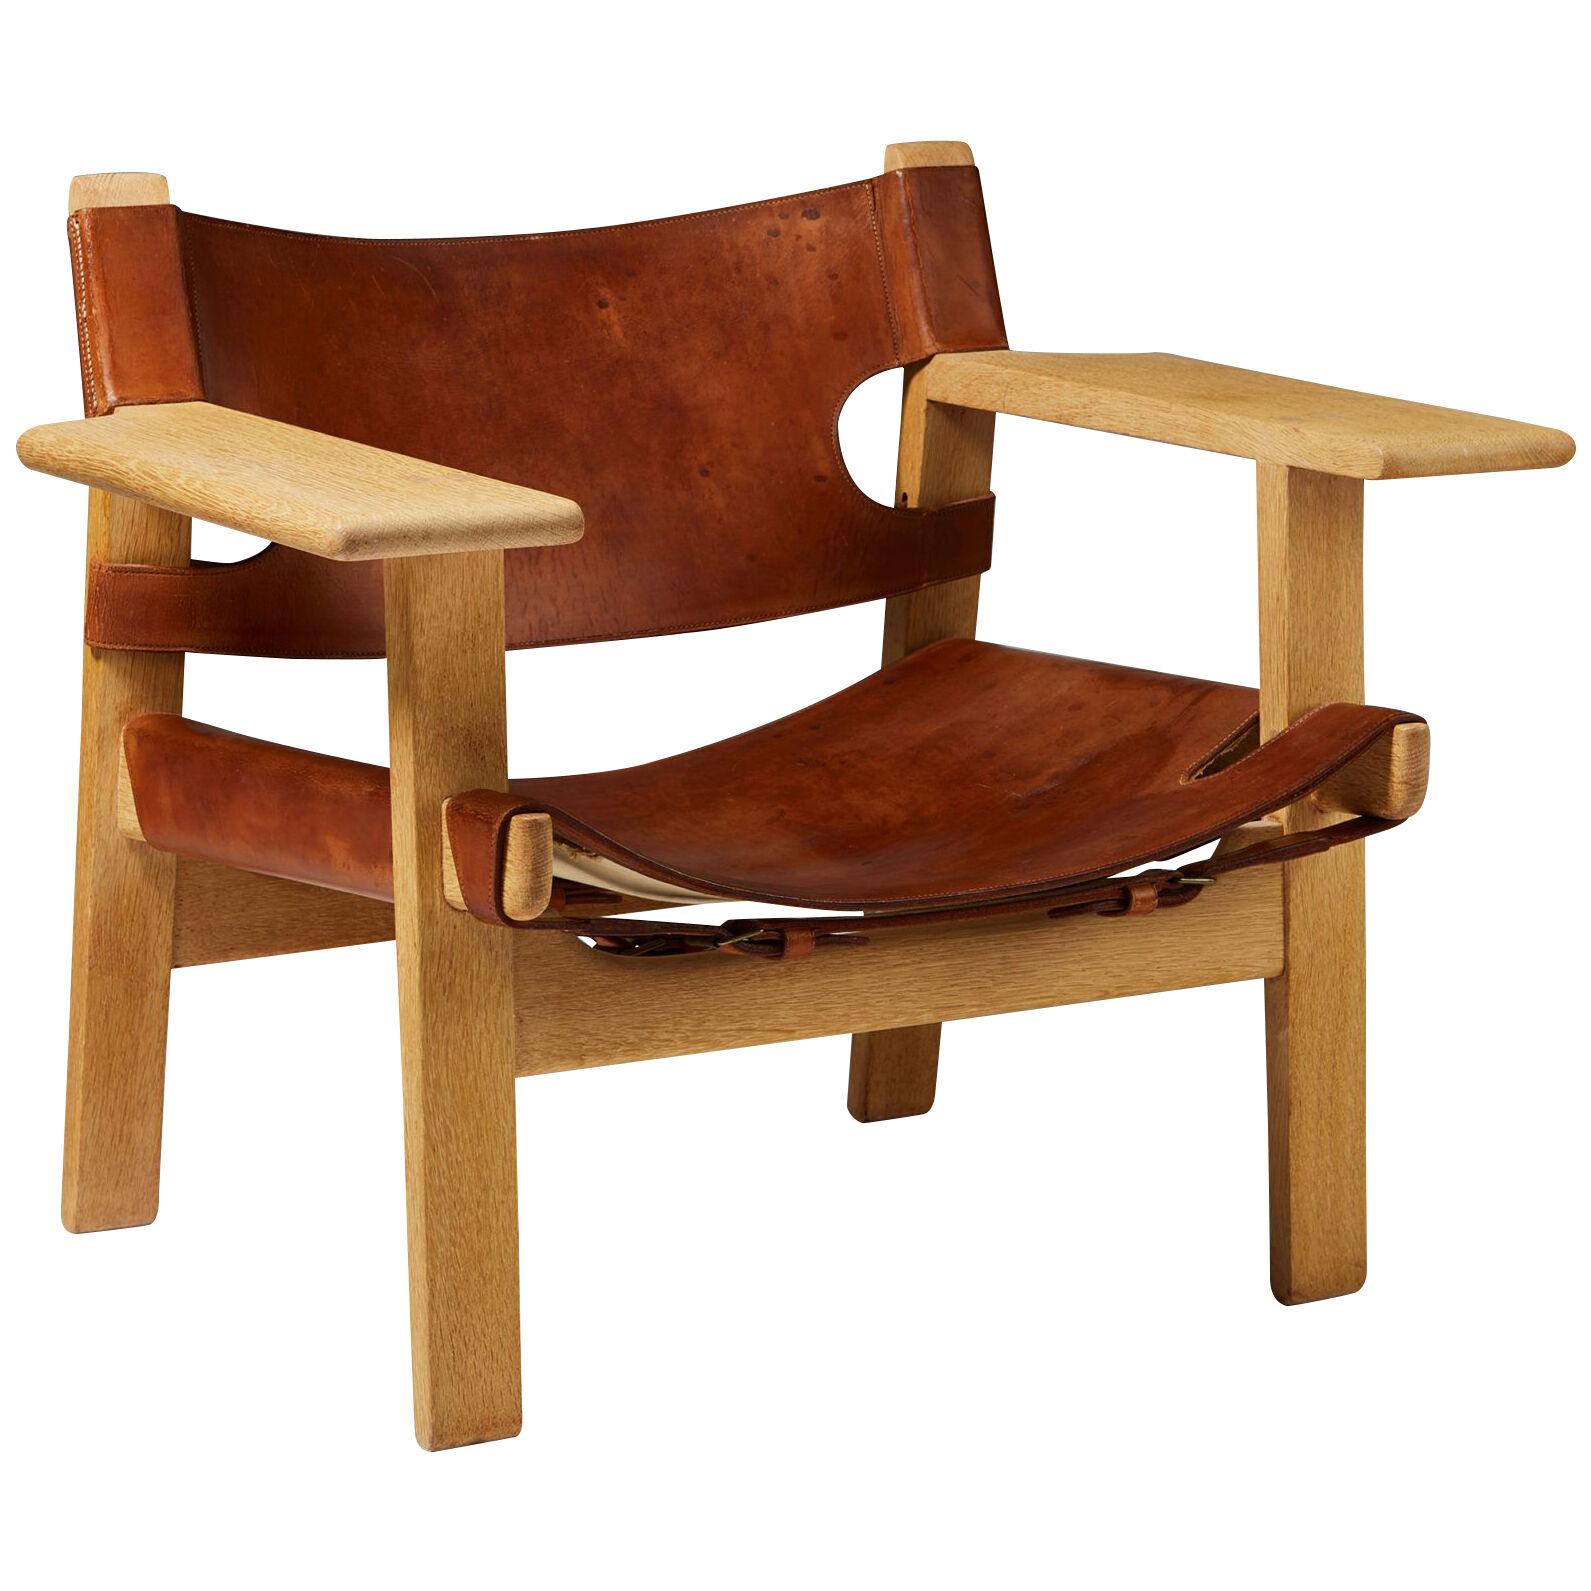 Armchair “Spanish” designed by Börge Mogensen for Erhard Rasmussen, 